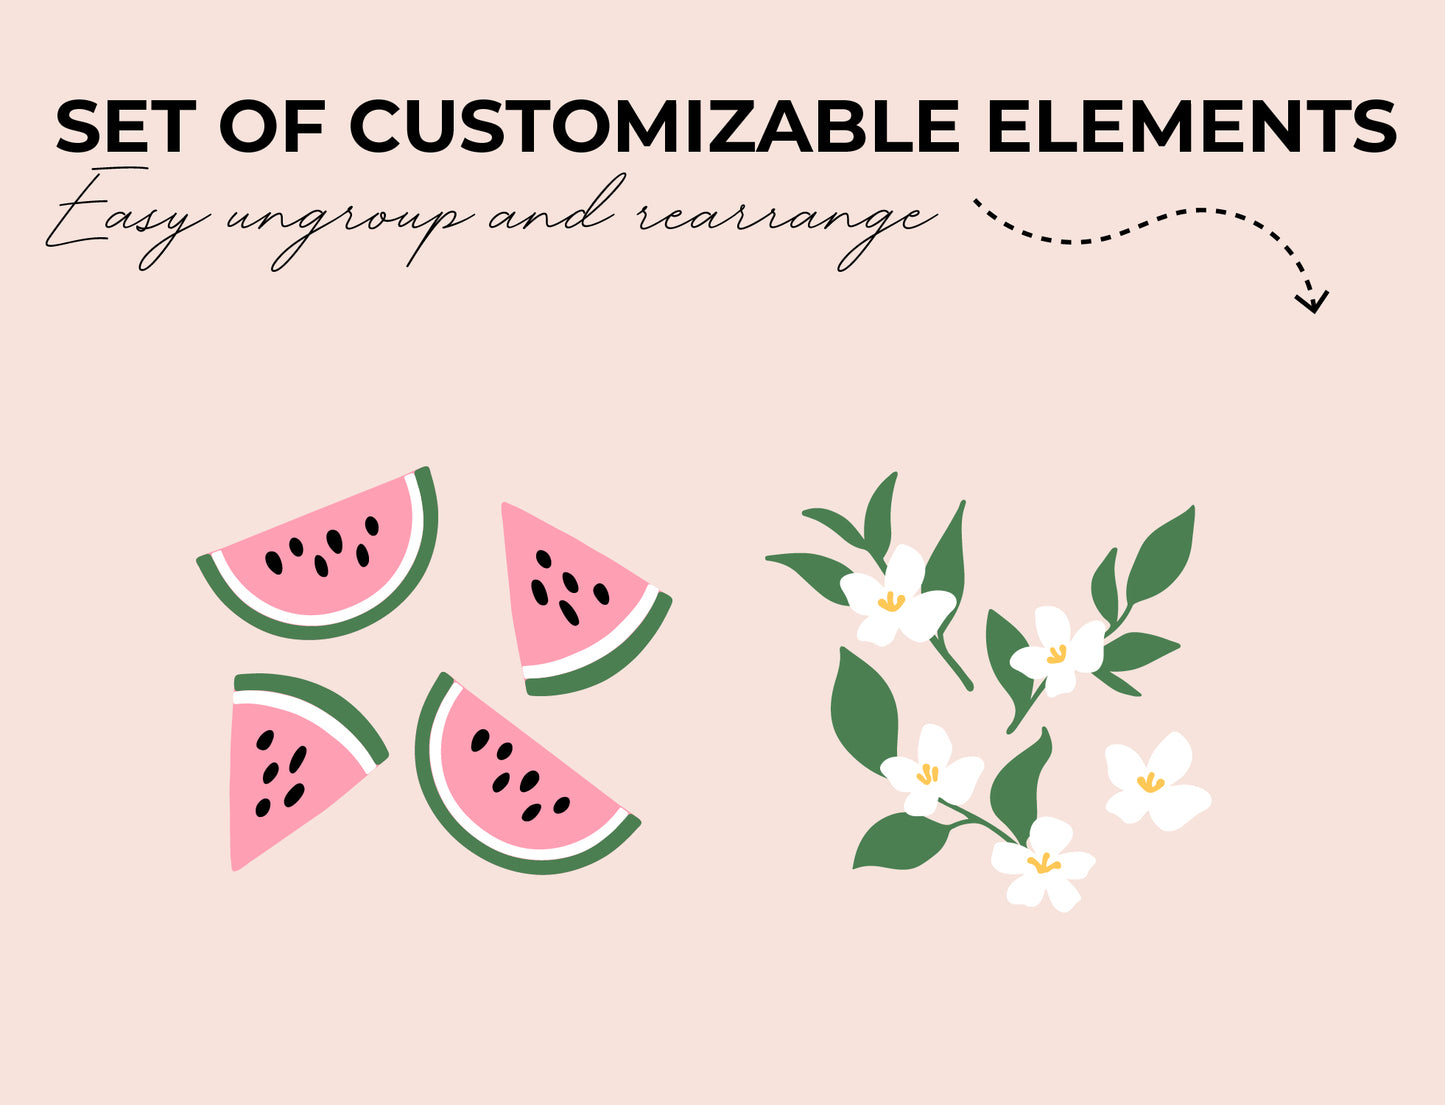 Floral Watermelon SVG Decal Set